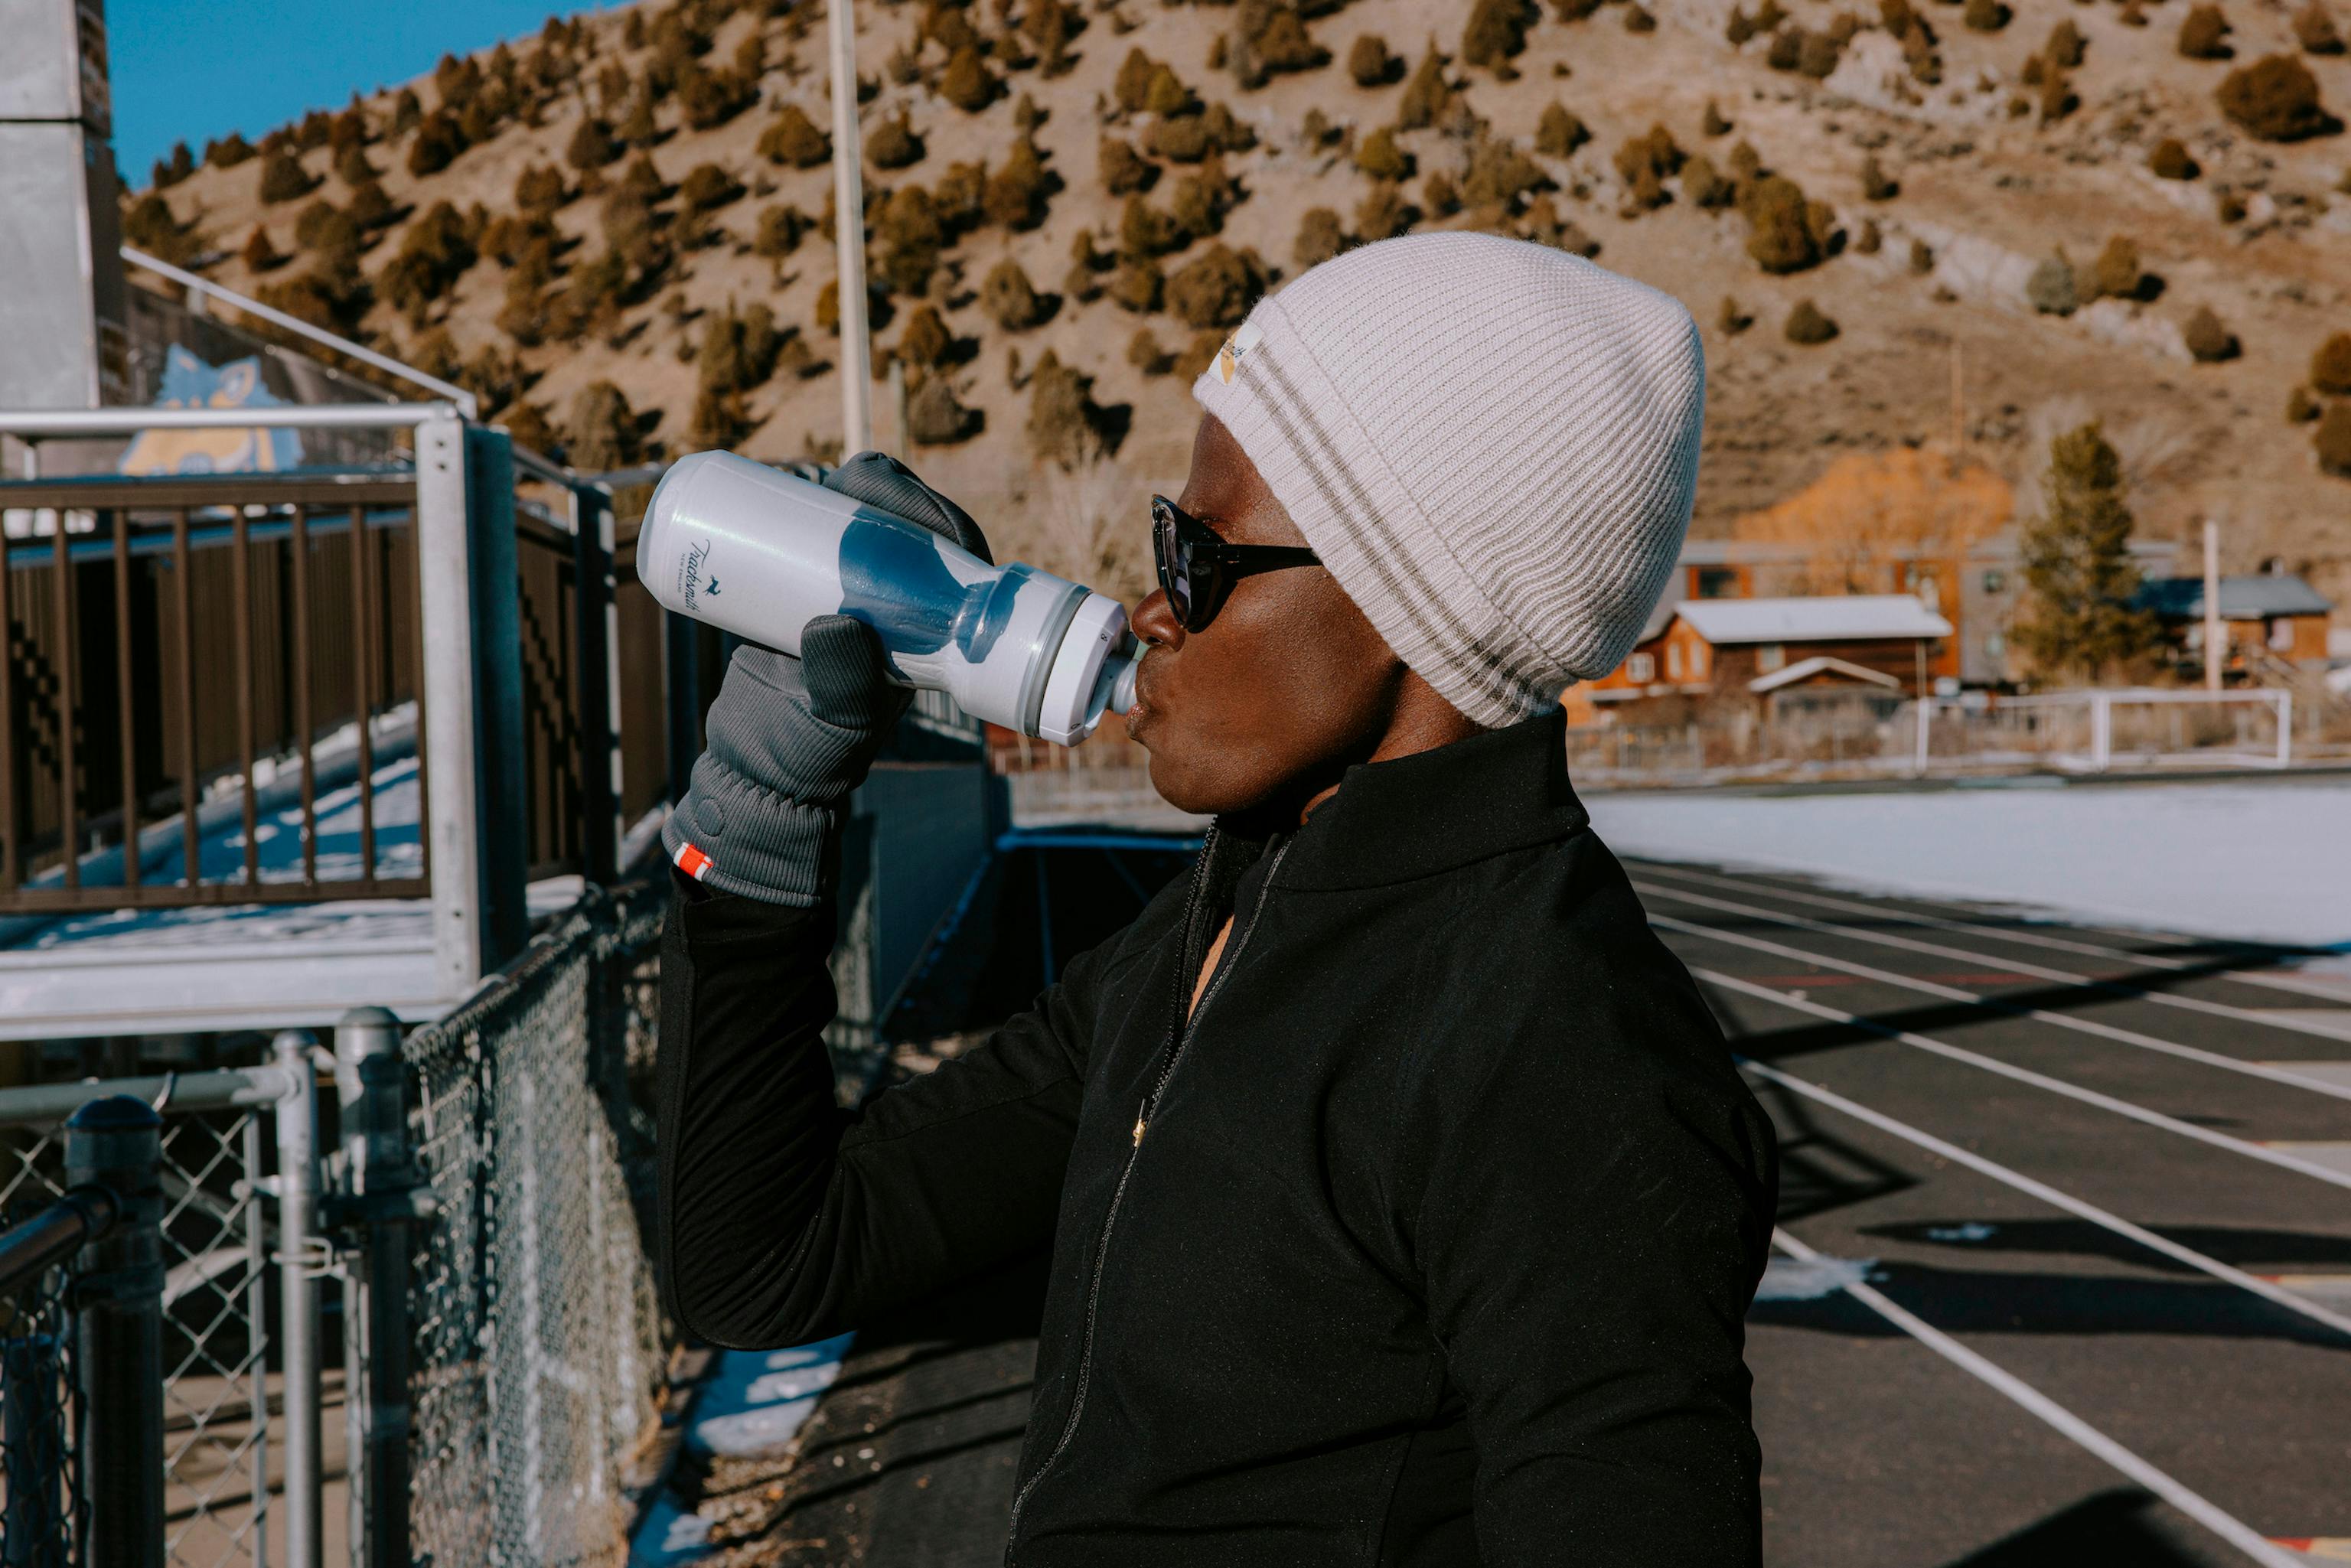 Polar Insulated 24oz Water Bottle – The Bikesmiths